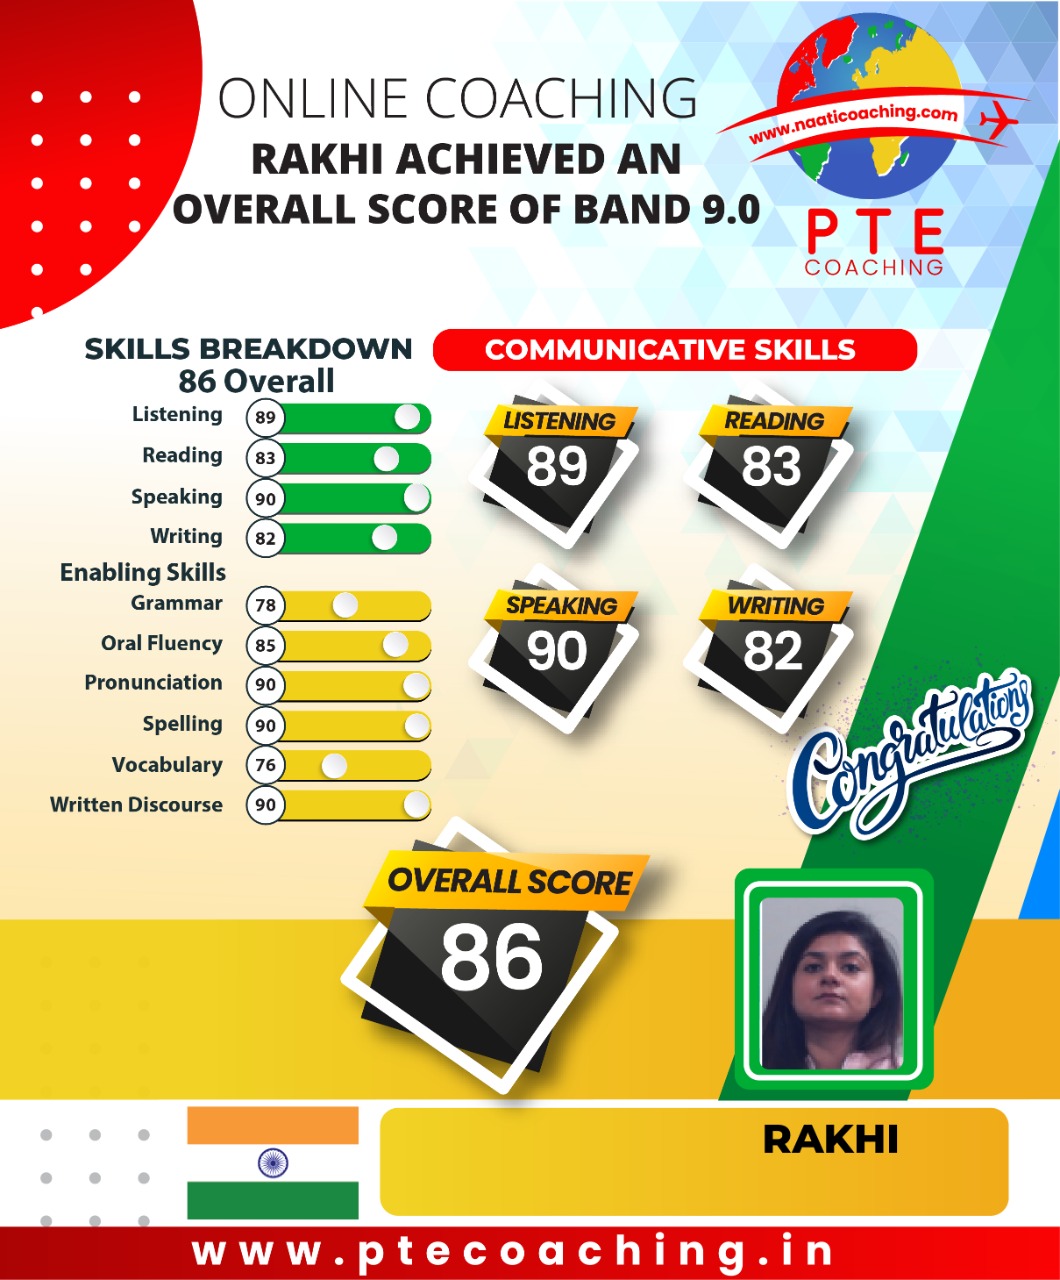 PTE Coaching Scorecard - Rakhi achieved an overall score of band 9.0